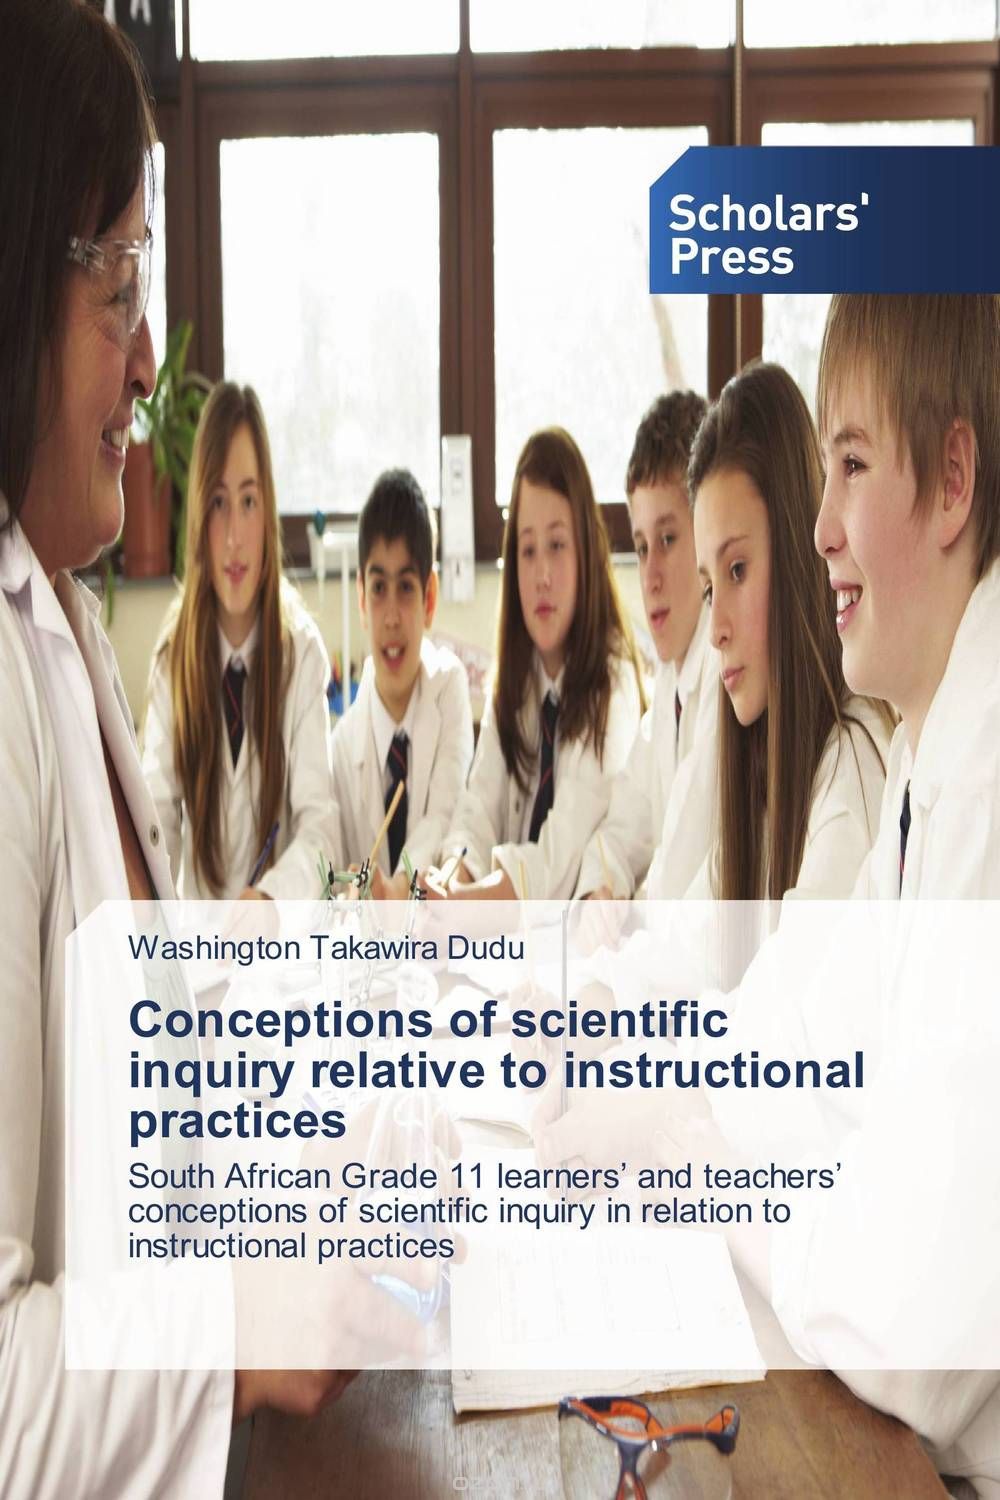 Скачать книгу "Conceptions of scientific inquiry relative to instructional practices"